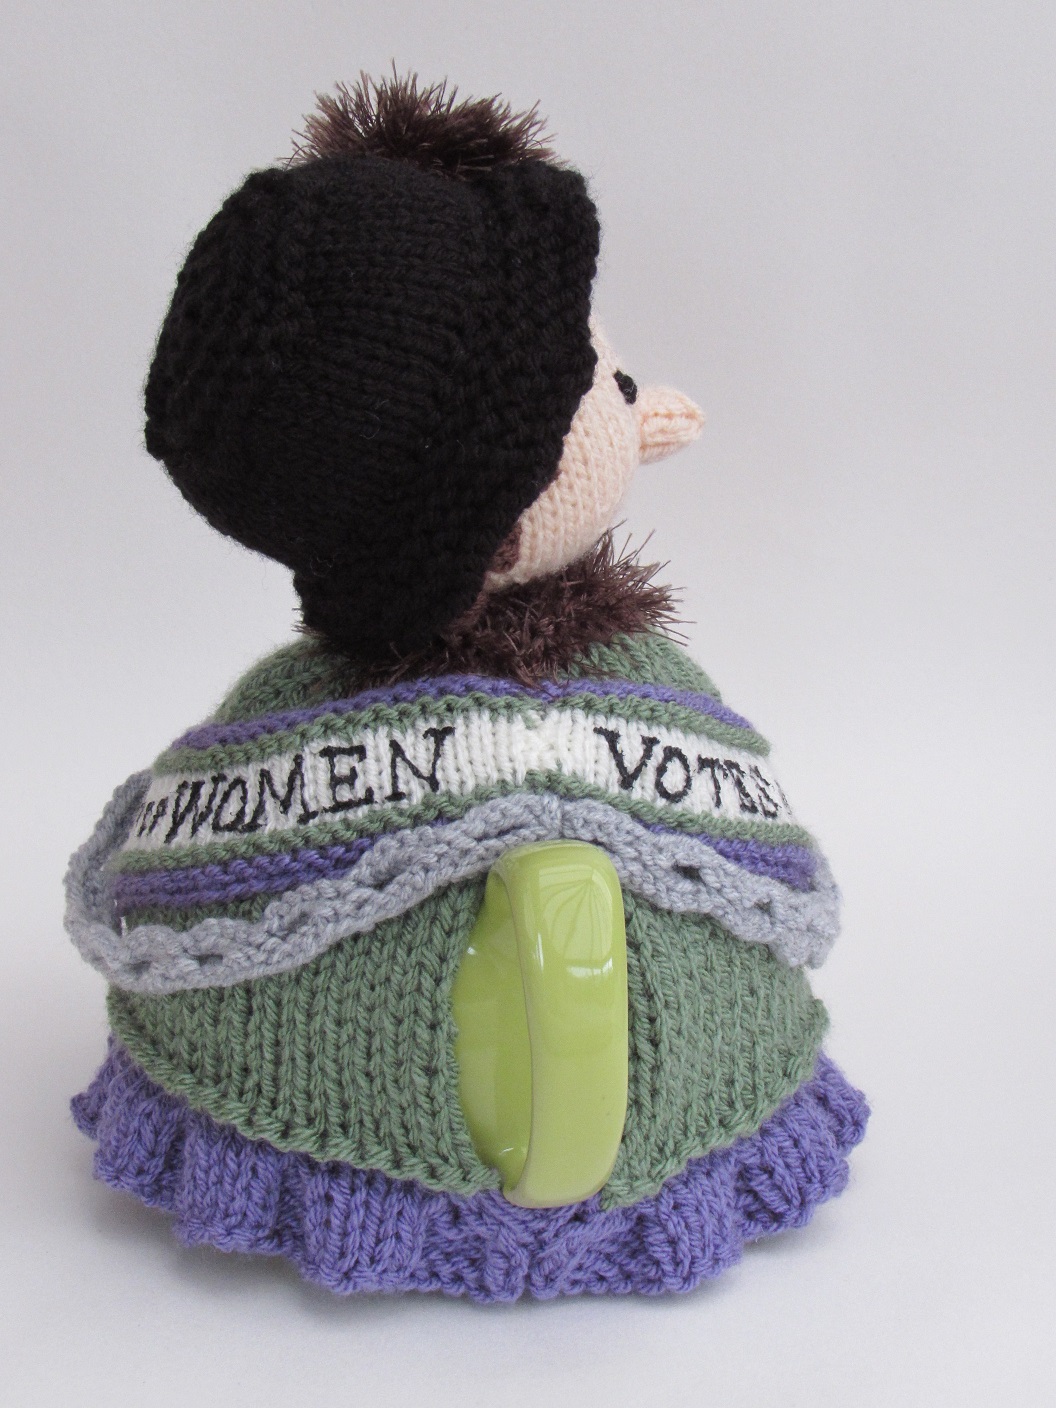 Suffragette knitting pattern